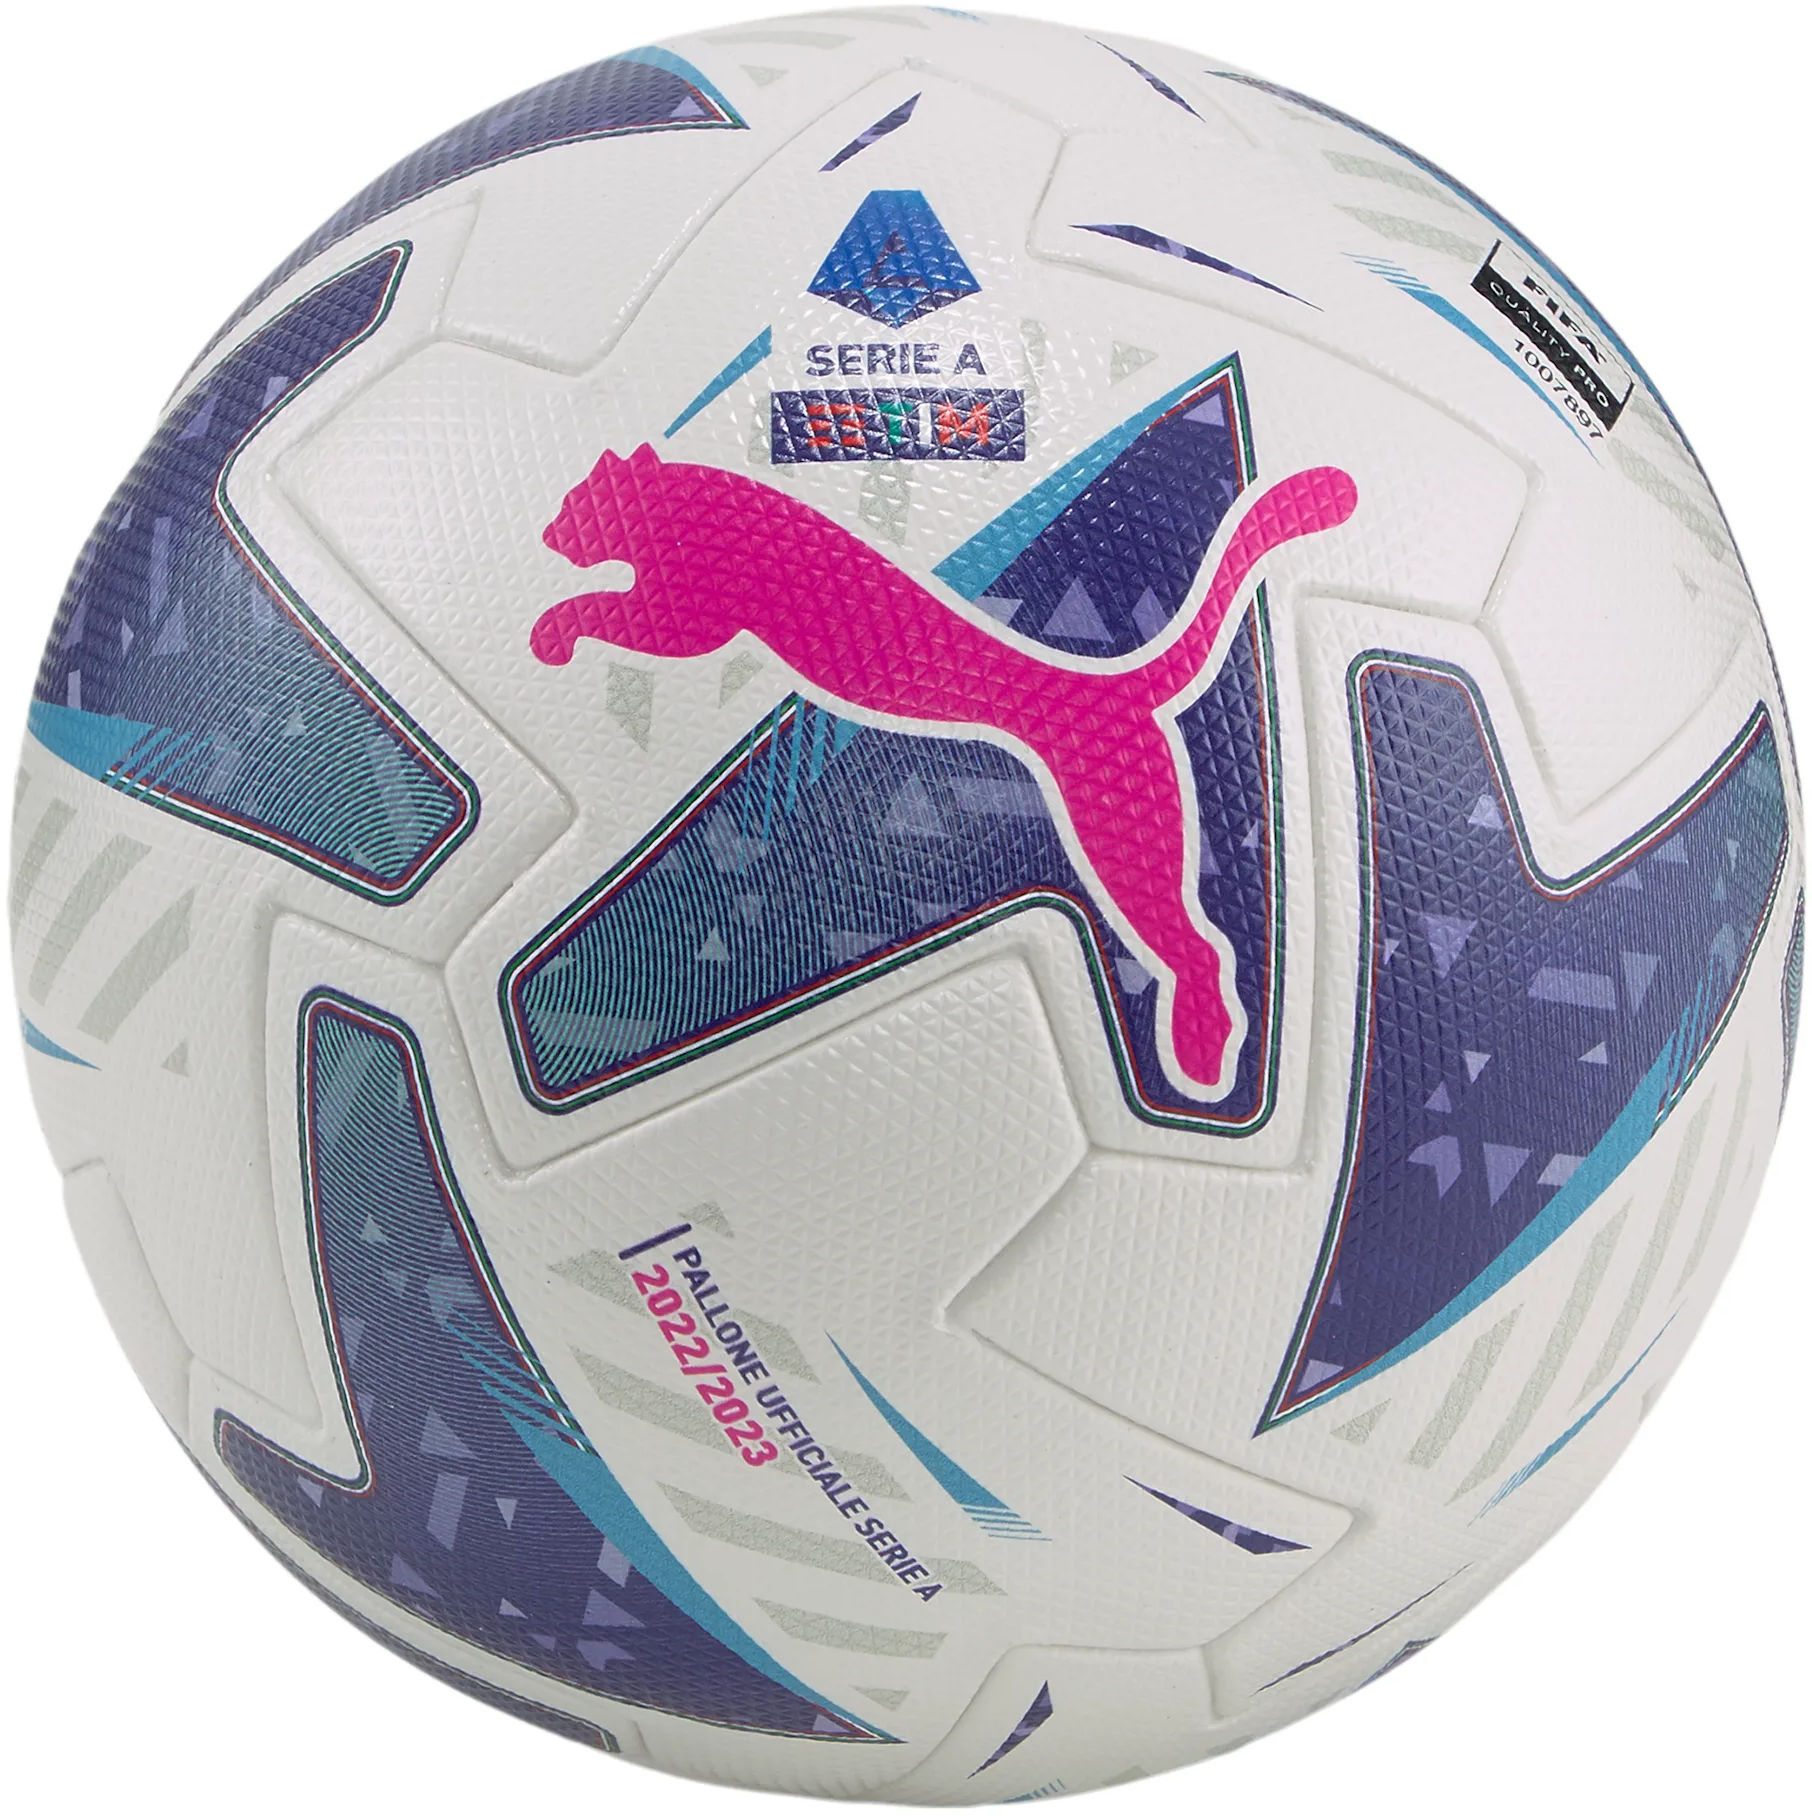 Ball Puma Orbita Serie A (FIFA Quality Pro)